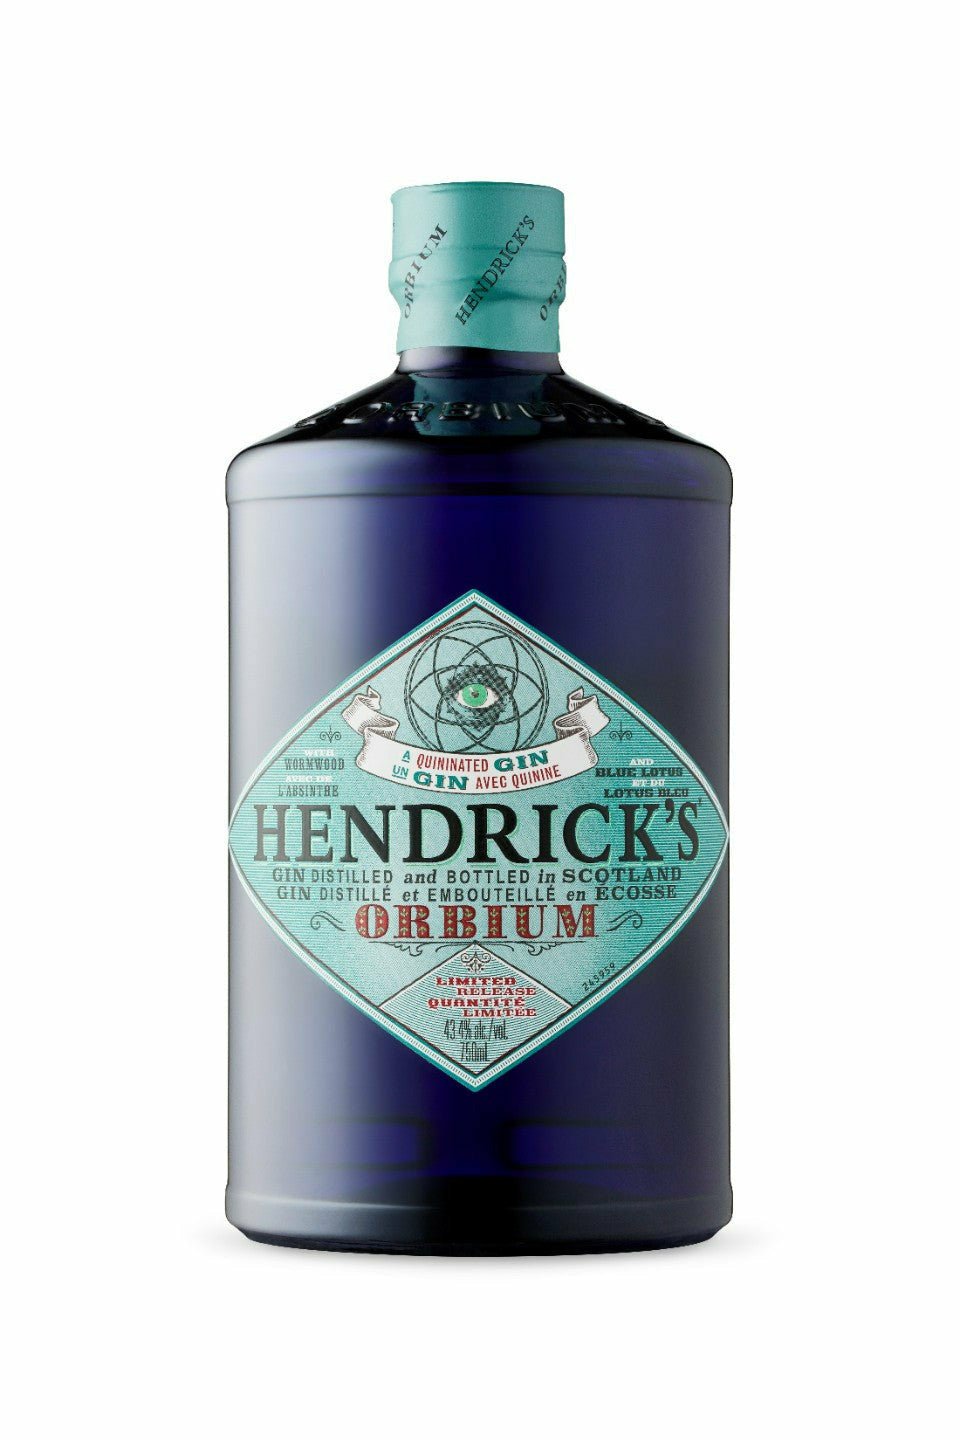 Hendrick's Orbium Gin - francosliquorstore